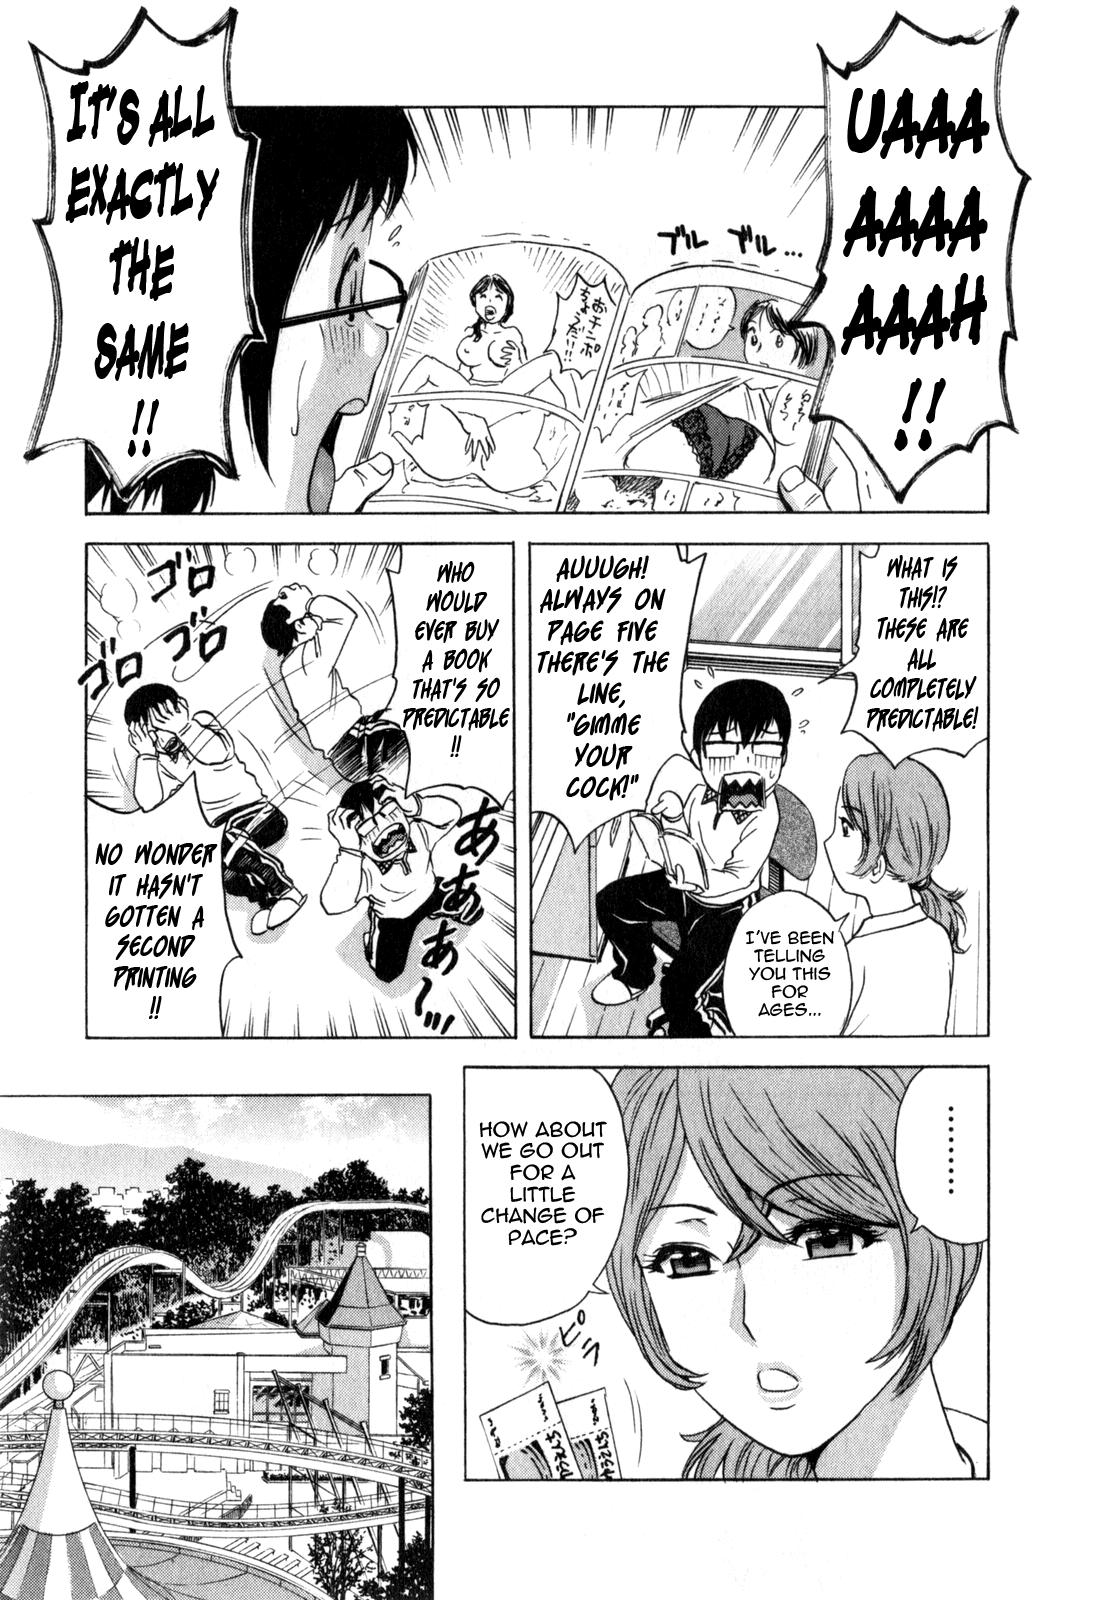 [Hidemaru] Life with Married Women Just Like a Manga 3 - Ch. 1-6 [English] {Tadanohito} 29